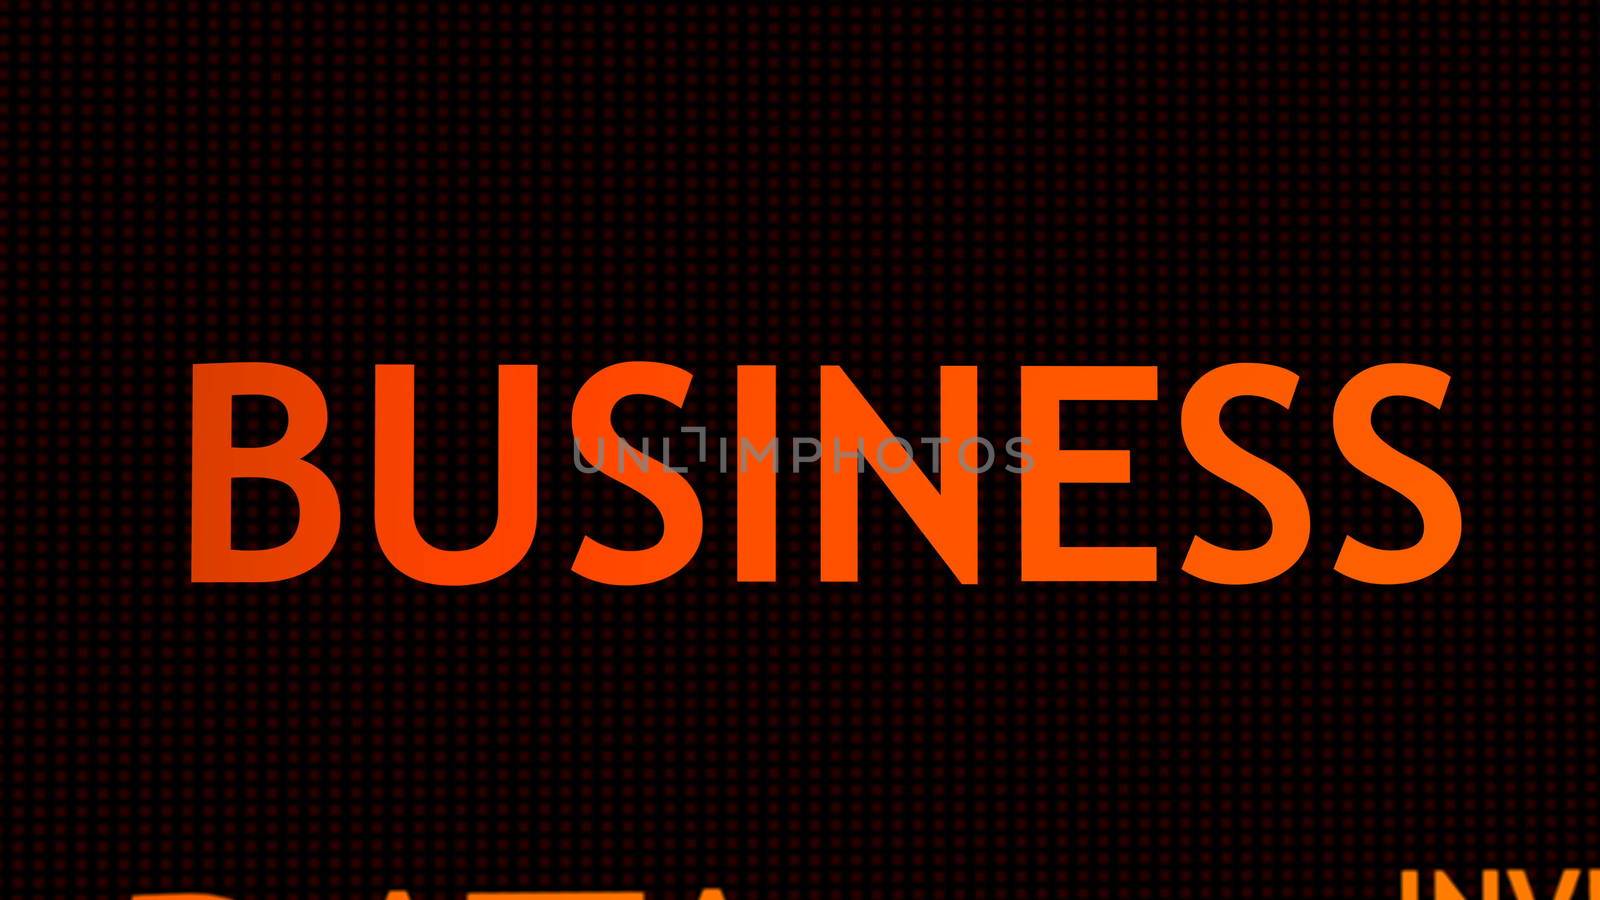 Business text animation. Digital illustration. 3d rendering